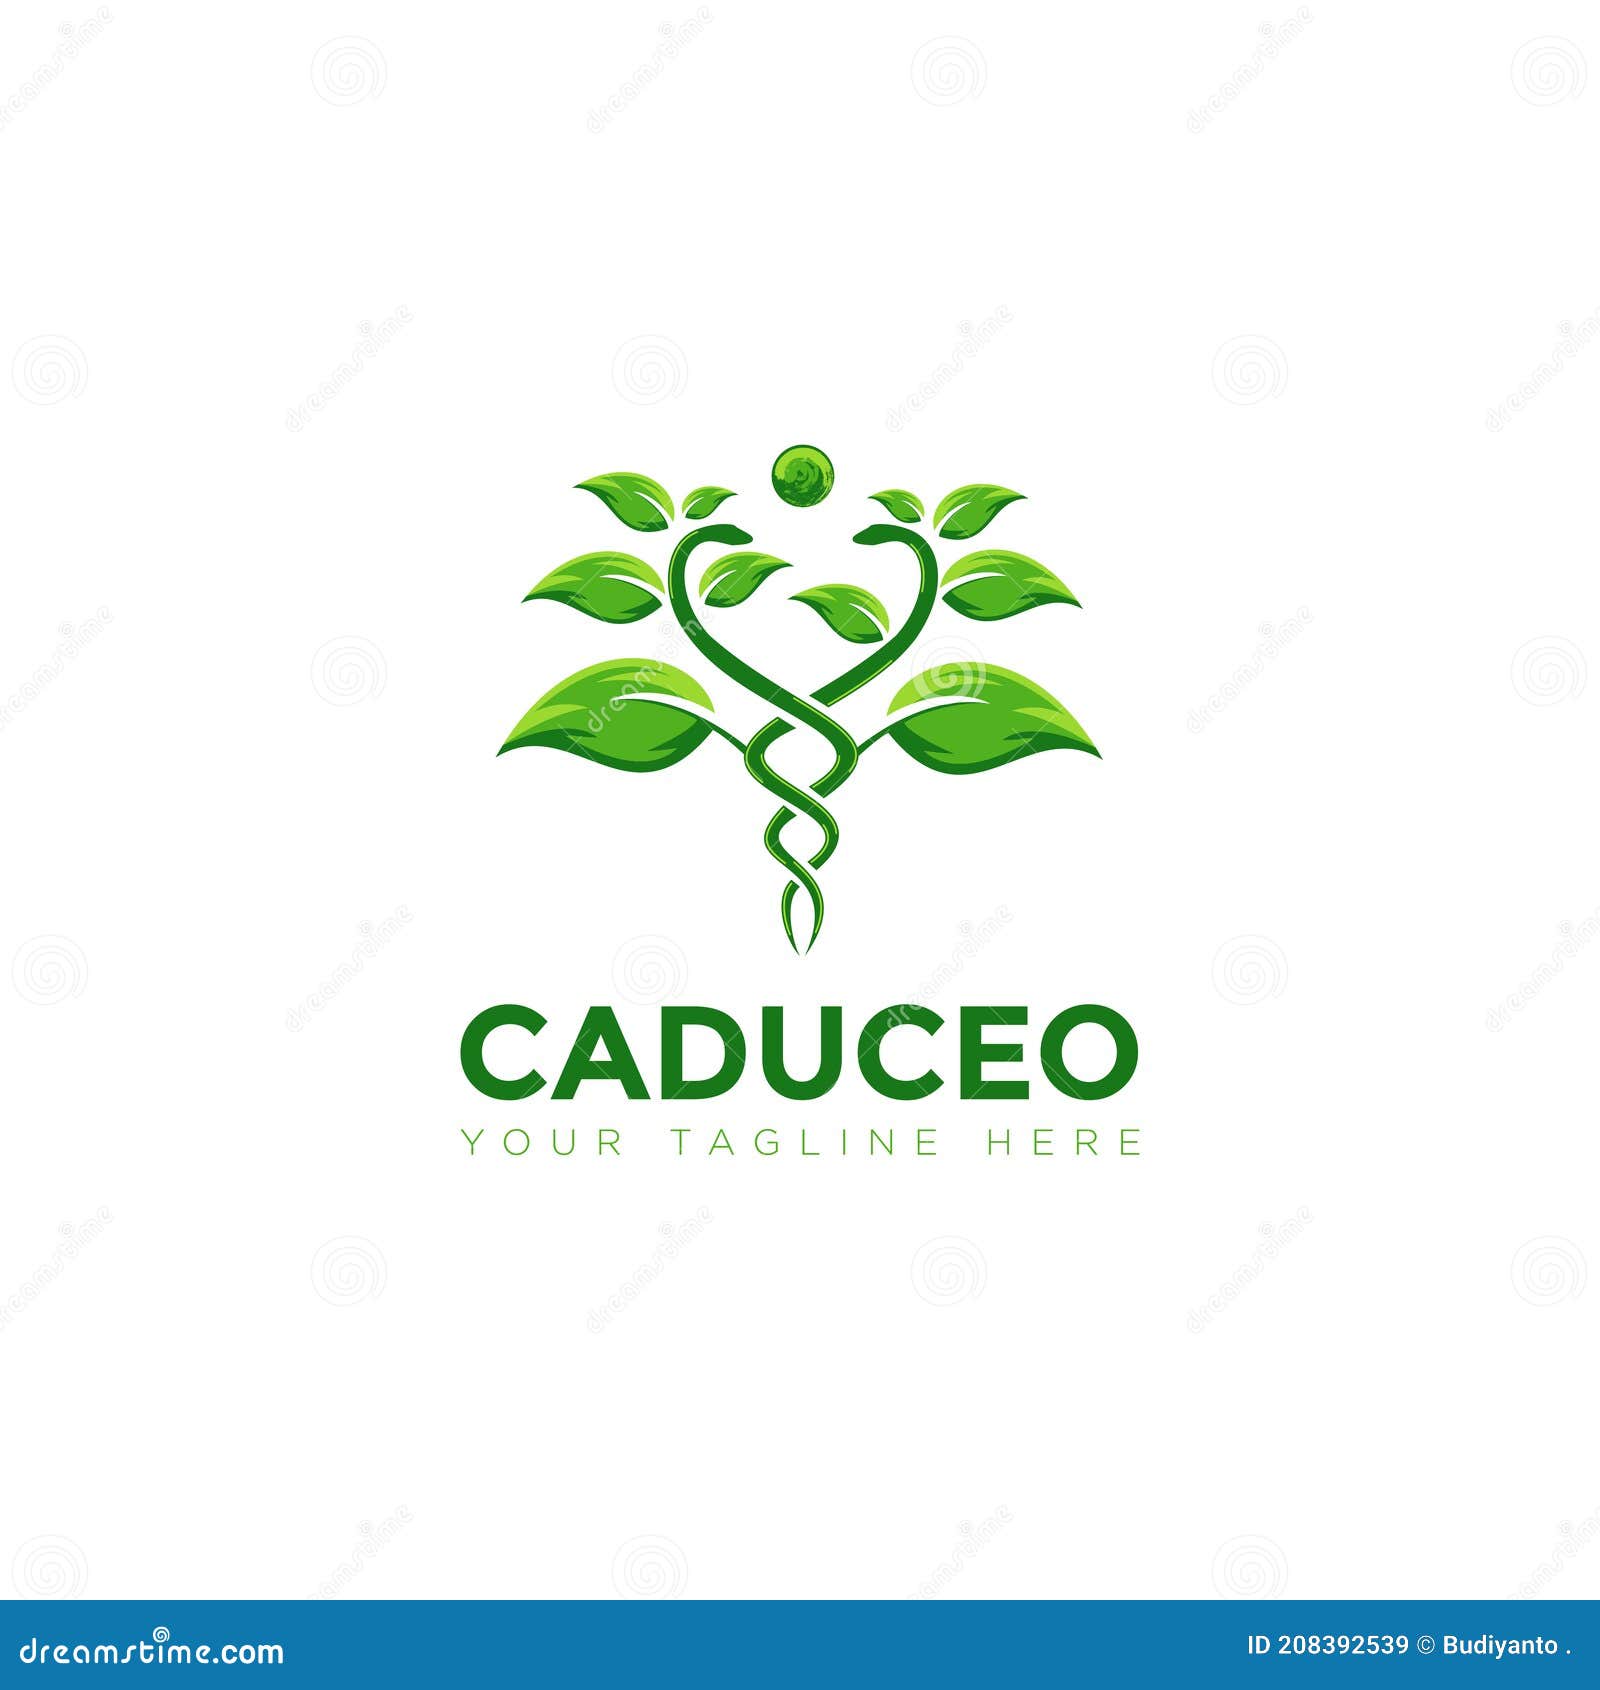 caduceo logo, creative plant snake 